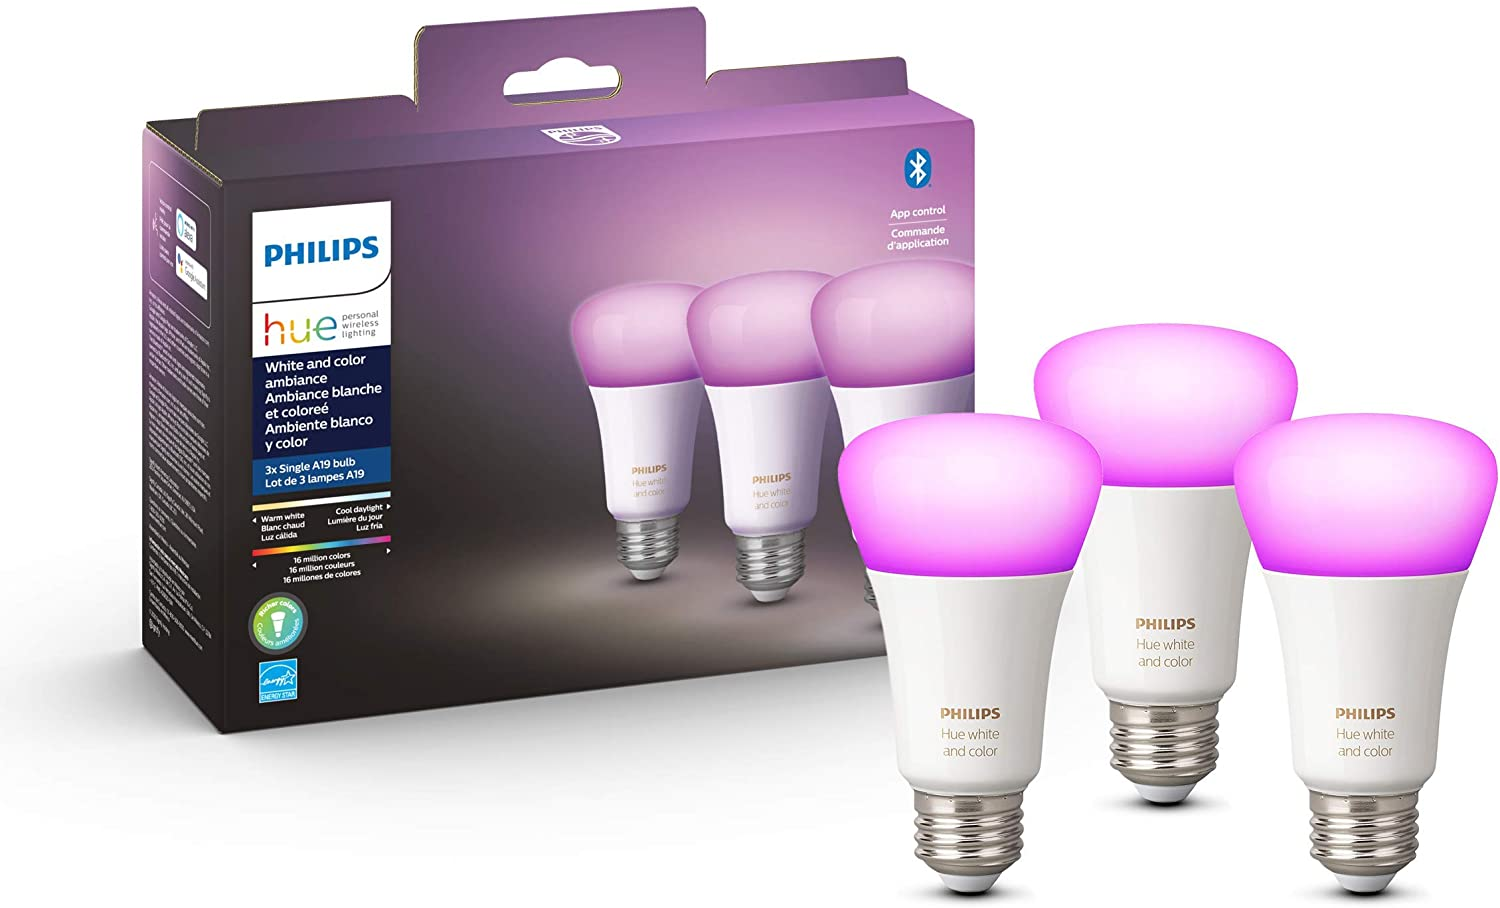 3 Philips Hue White and Color Ambiance A19 E26 LED Smart Bulb $72.24